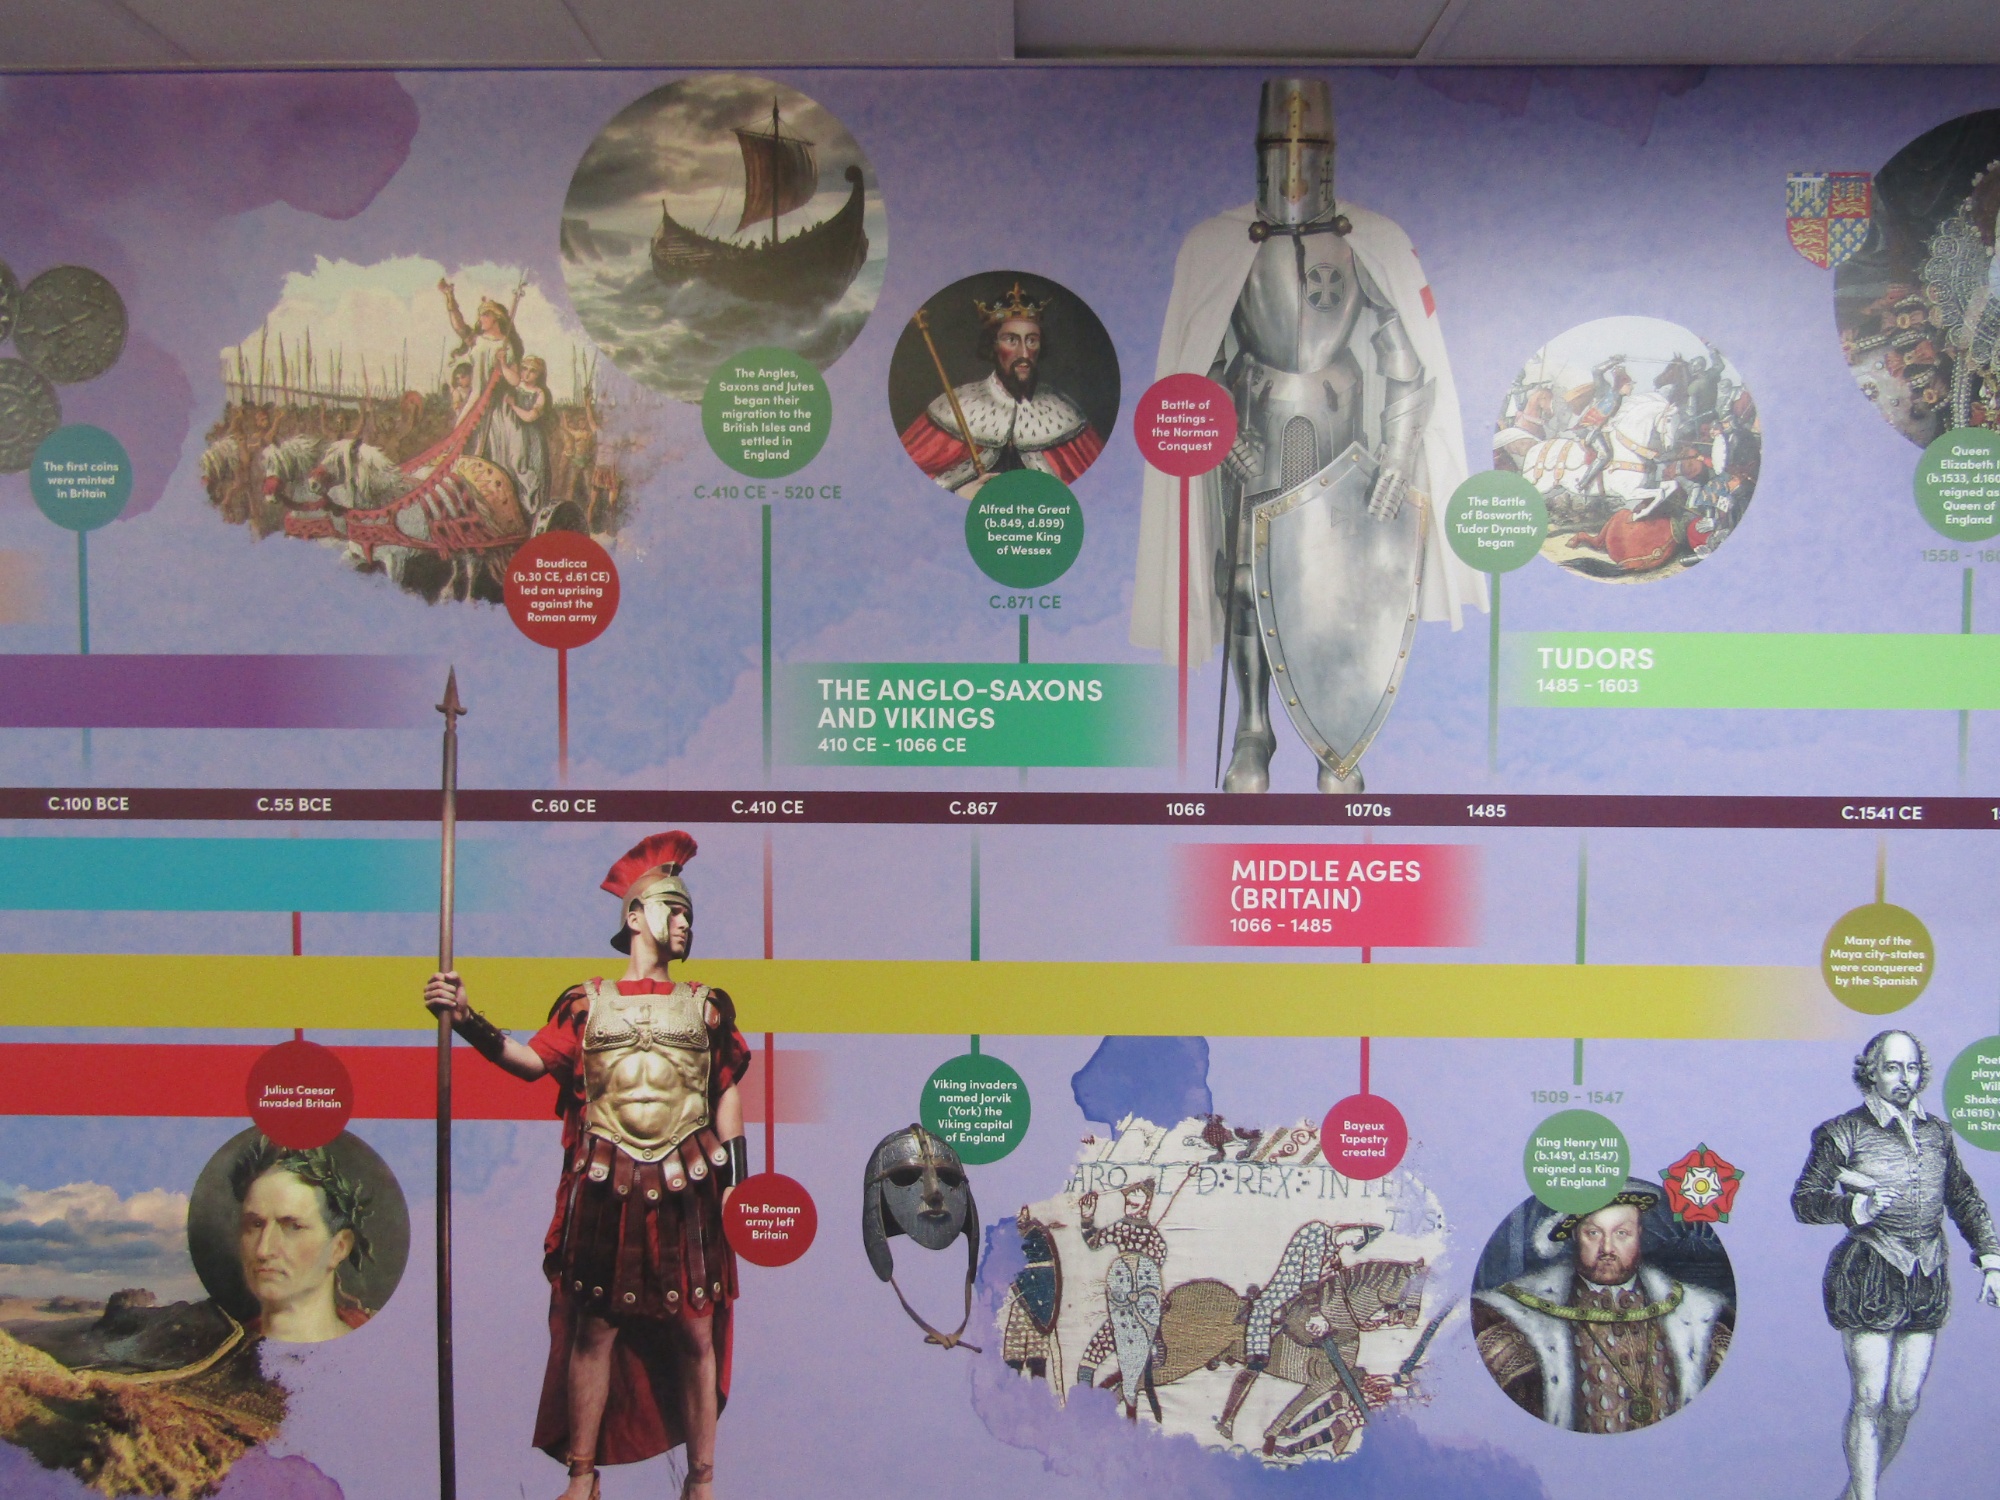 History Timeline